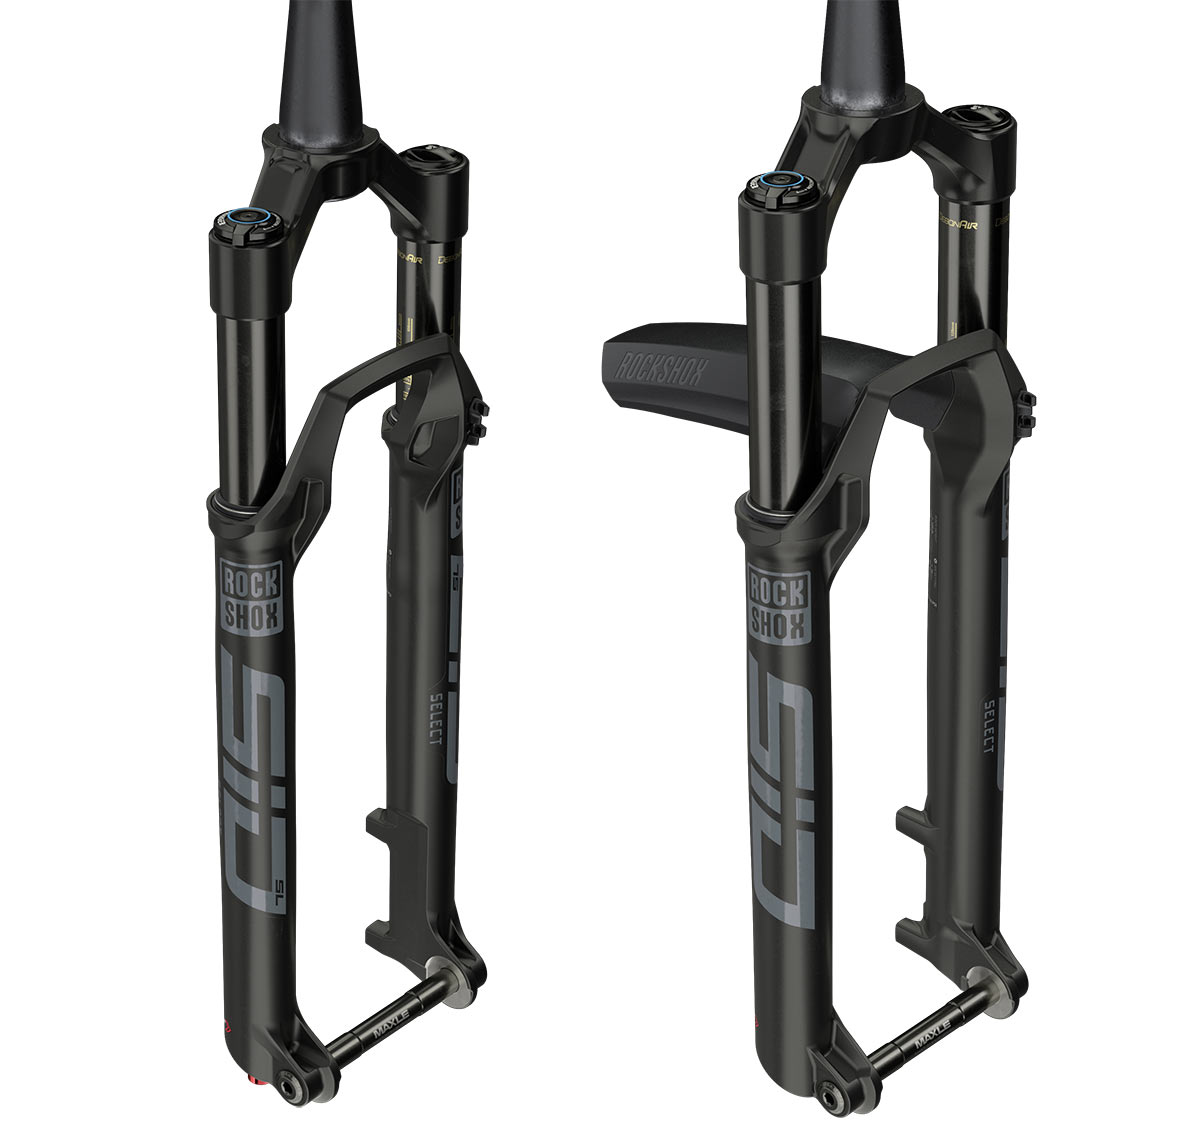 2021 rockshox sid sl and sid select mountain bike suspension forks get regular charger dampers